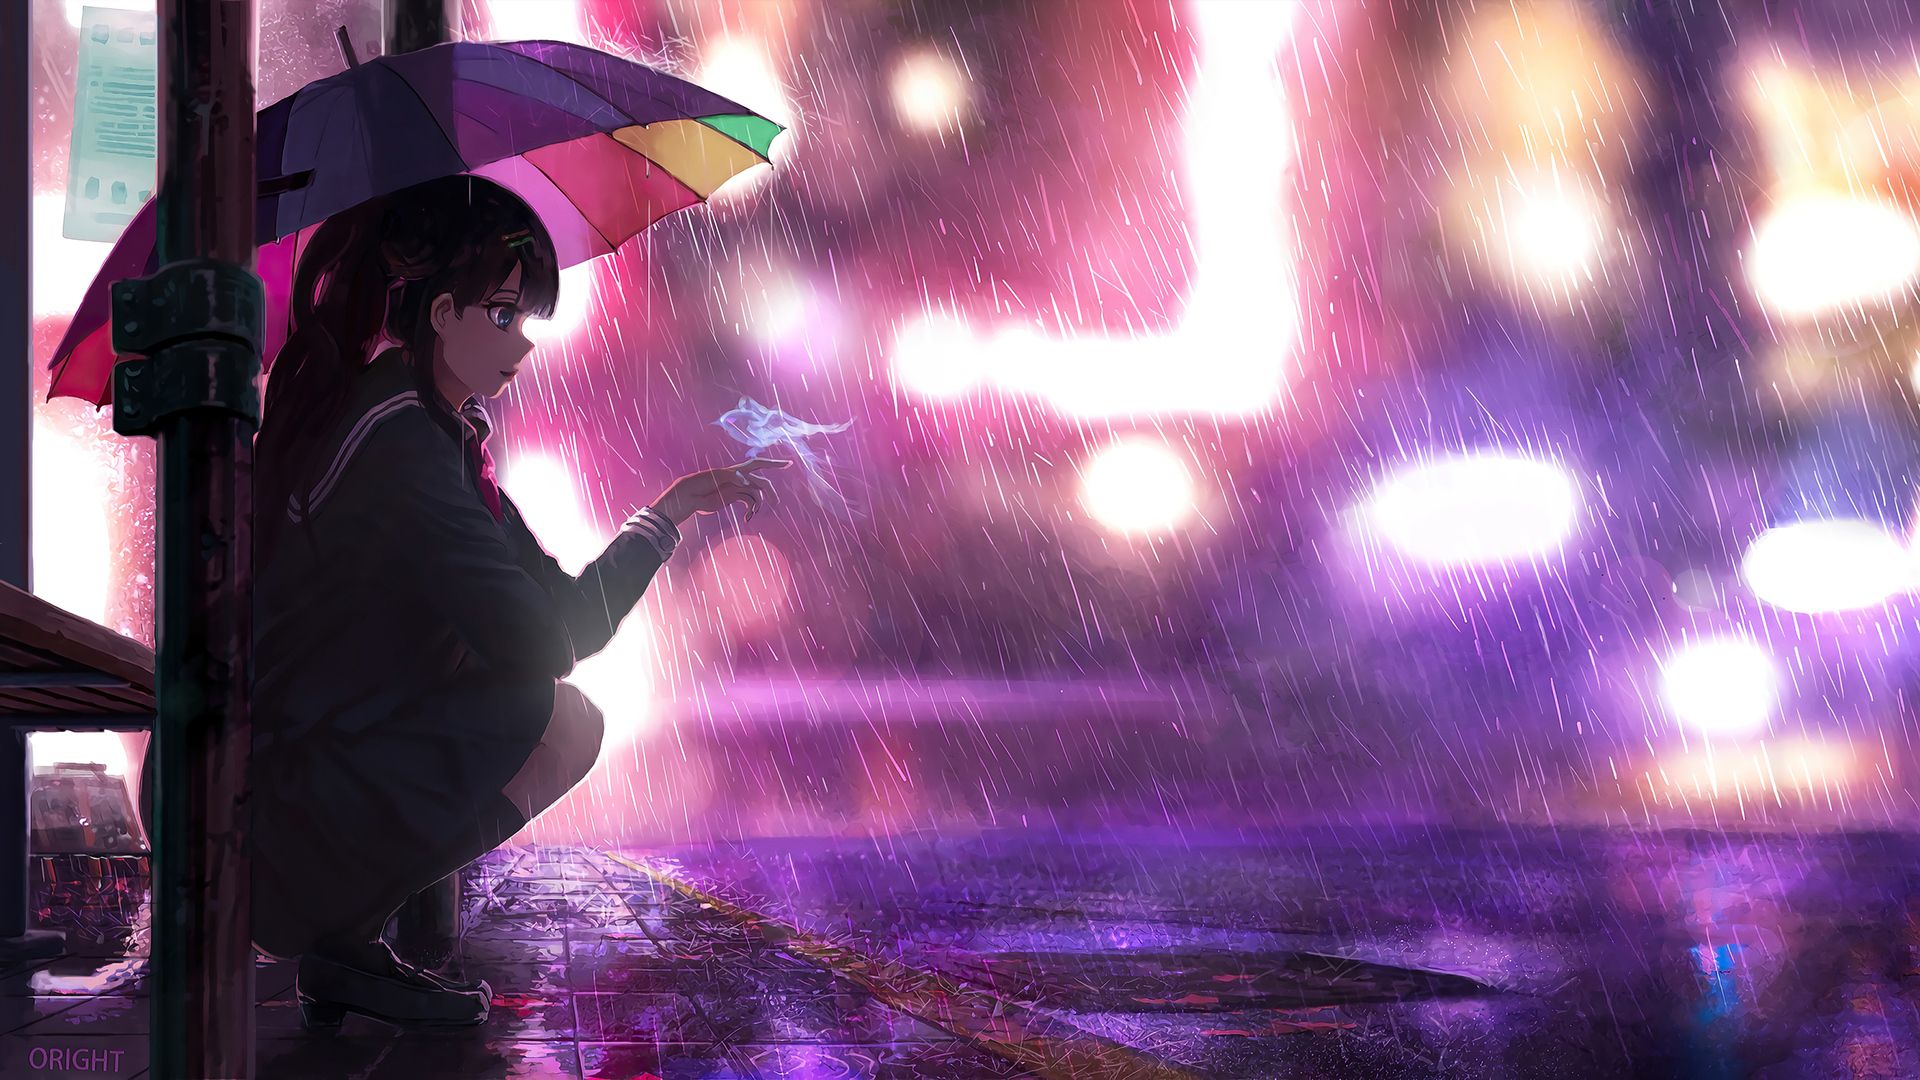 Umbrella Rain Anime Girl 4k Laptop Full HD 1080P HD 4k Wallpaper, Image, Background, Photo and Picture